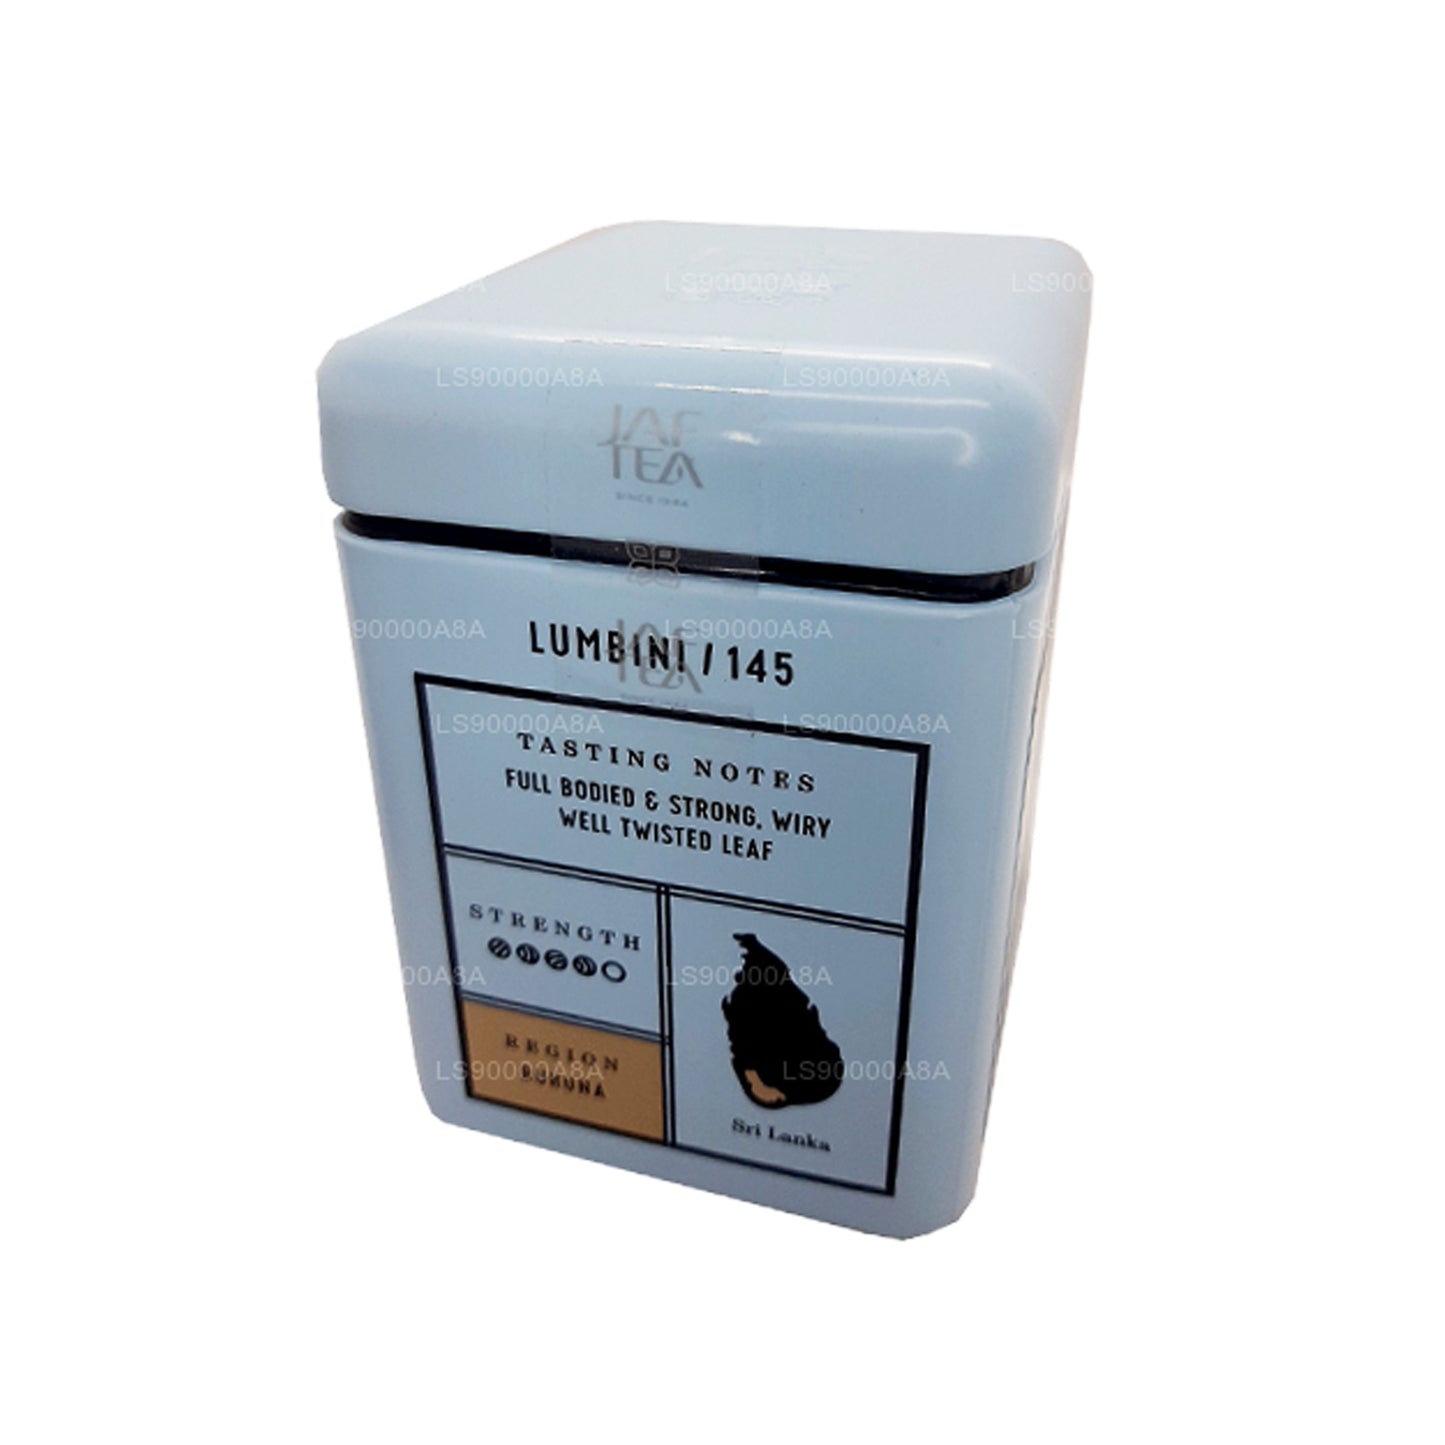 Jaf Tea Single Estate Collection 蓝毗尼 (100g) 罐